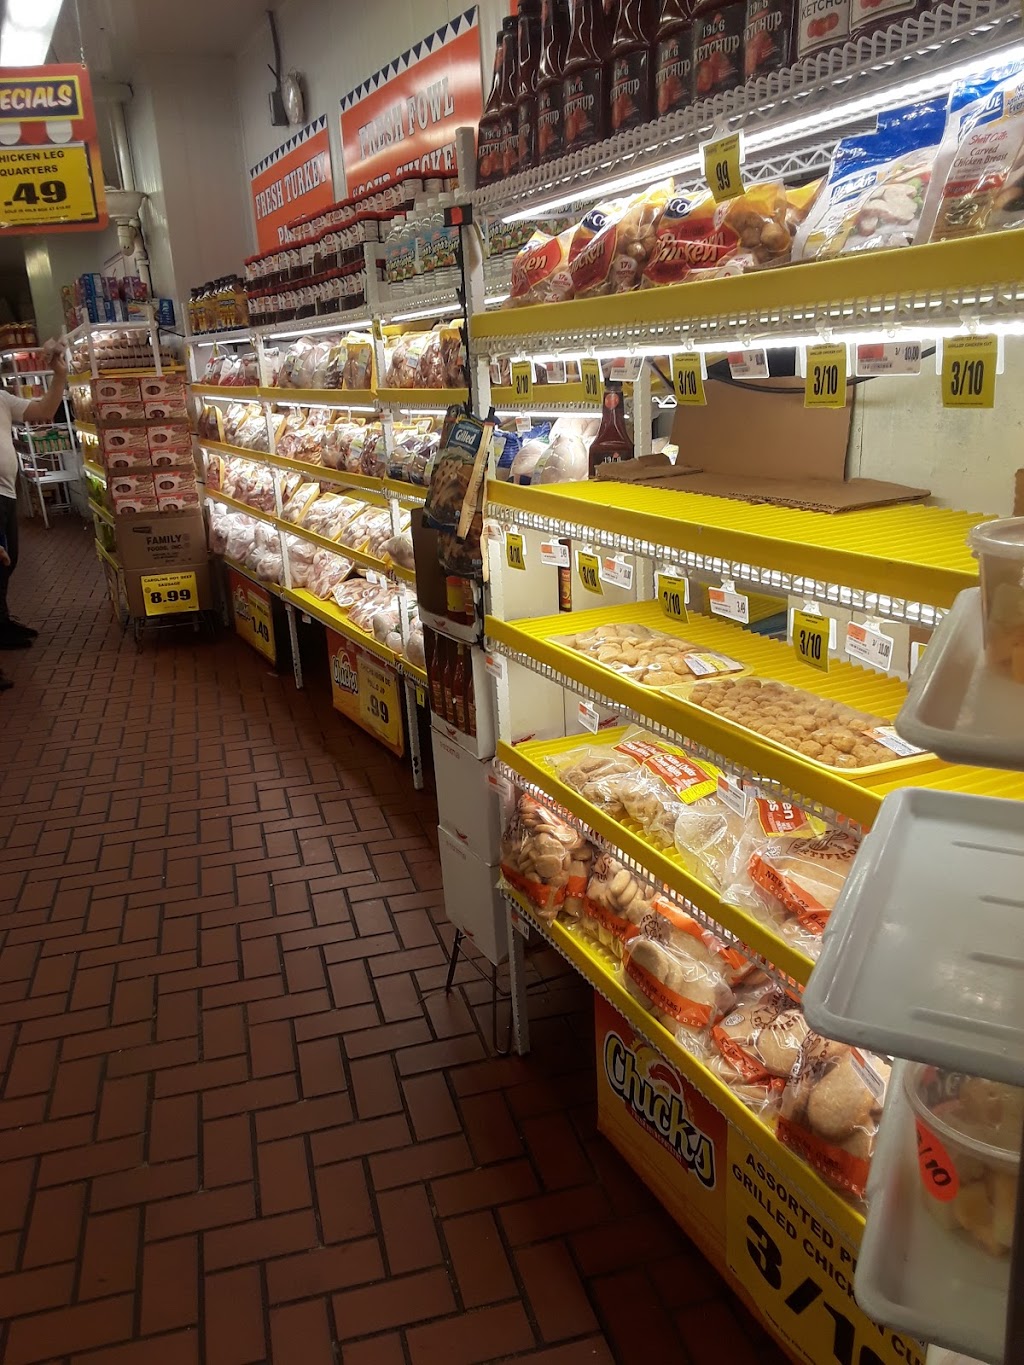 Western Beef Supermarket | 1564 Southern Blvd, Bronx, NY 10460 | Phone: (718) 617-1500